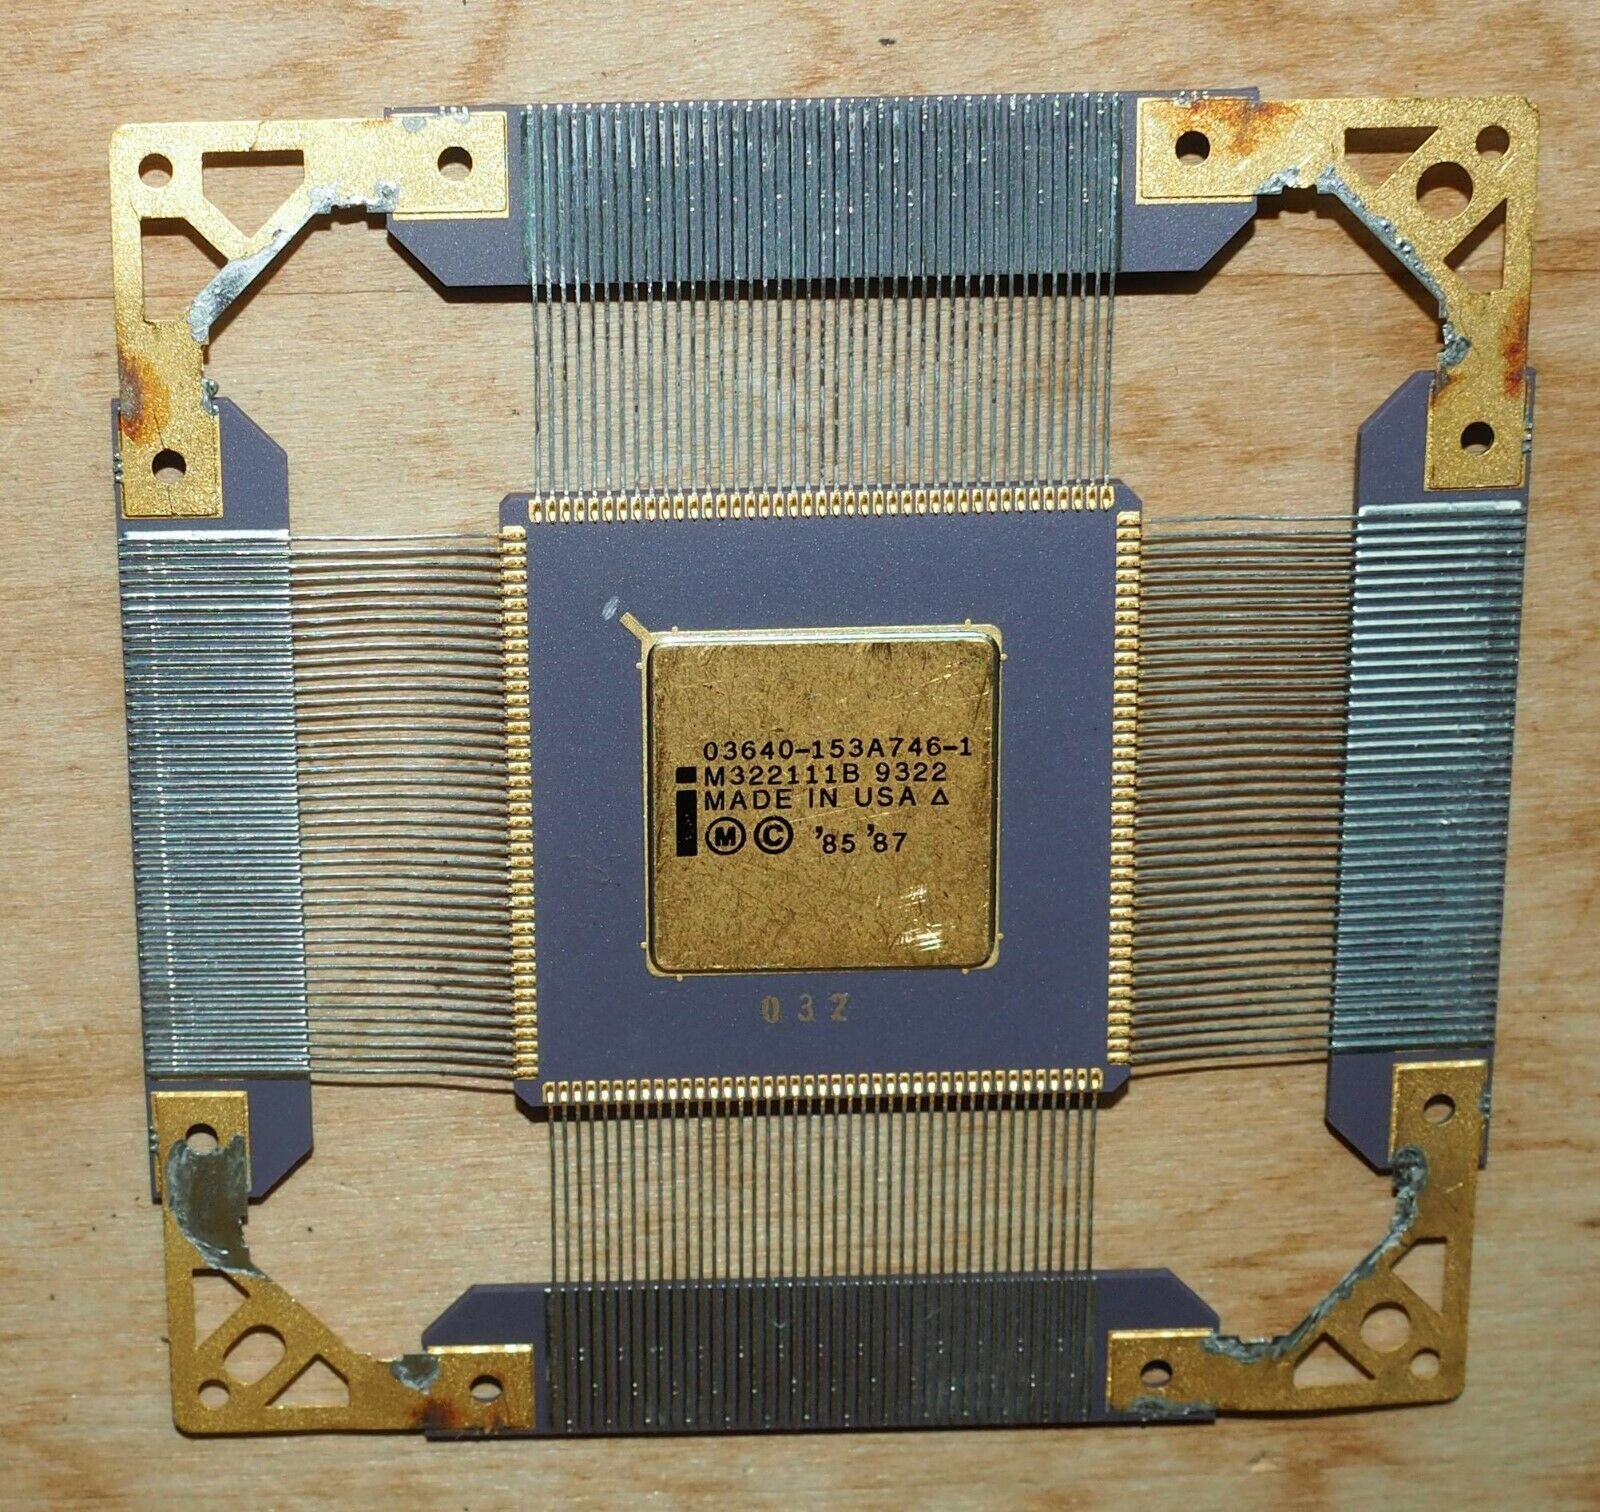 foone on Twitter: "Today's weird-thing-on-ebay: A Military-Spec Intel 386 chip! https://t.co/KhGflhhAgr https://t.co/GHSIYA6BKL" / Twitter